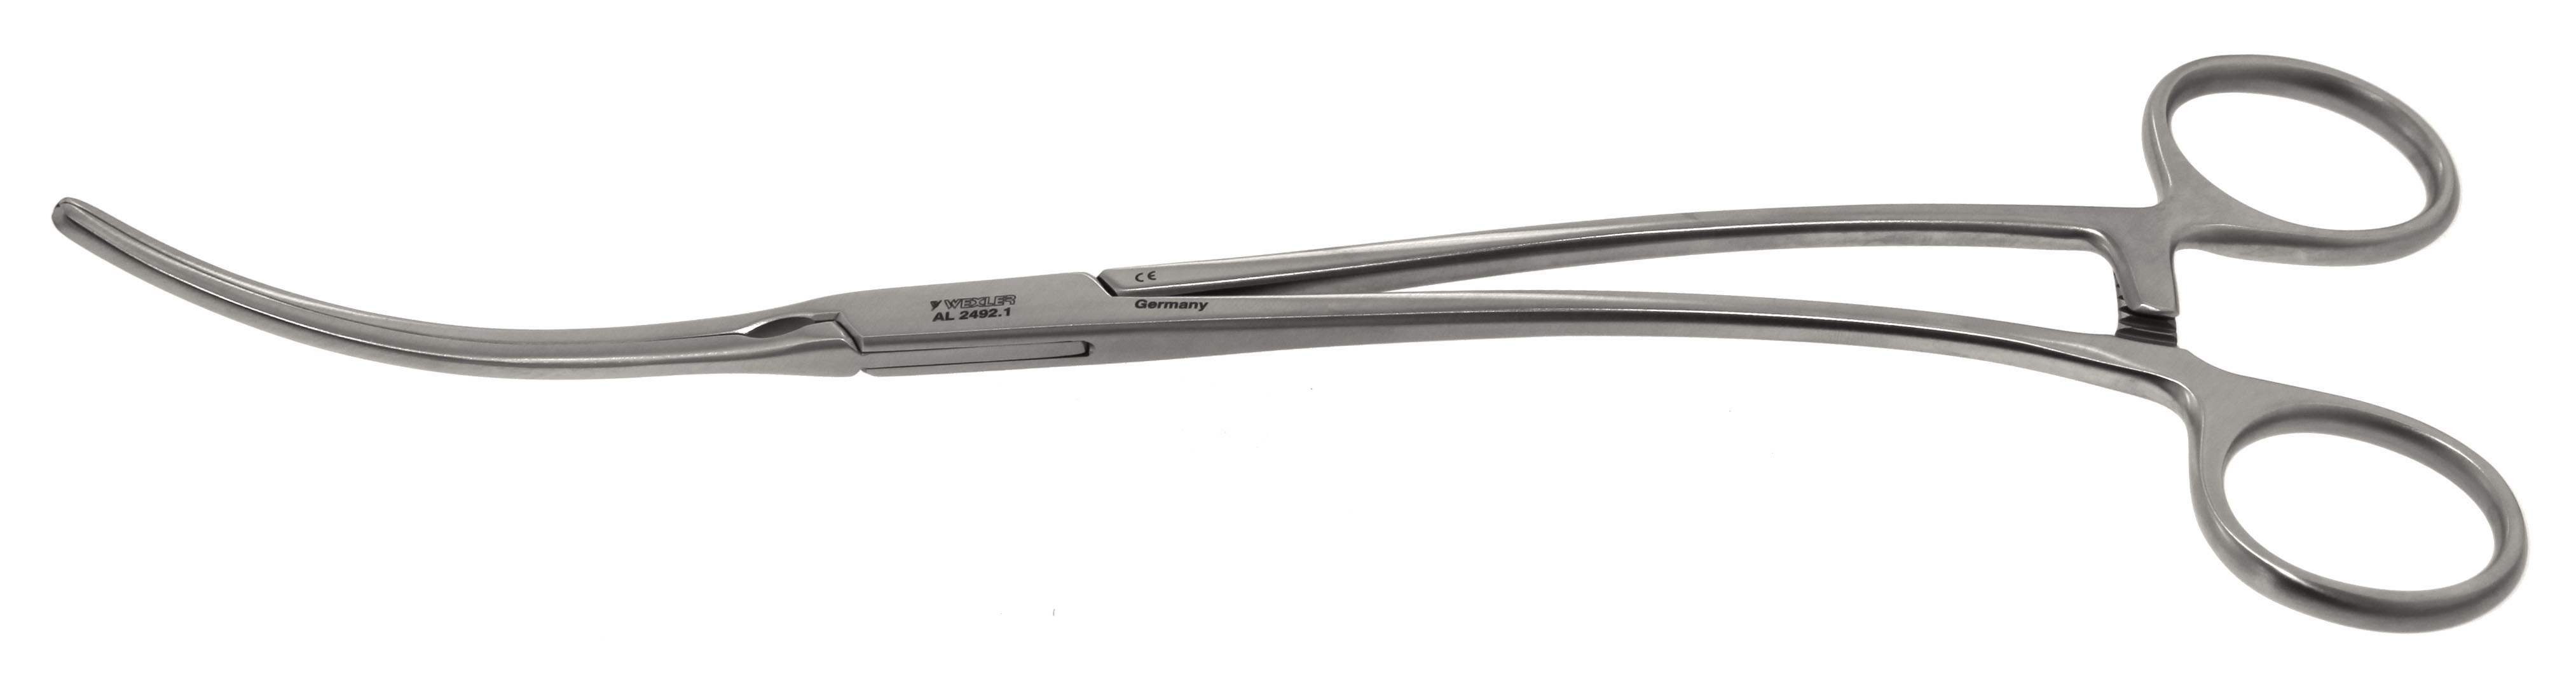 Wexler Aorta Aneurysm Clamp - Curved 70mm DeBakey Atraumatic jaws